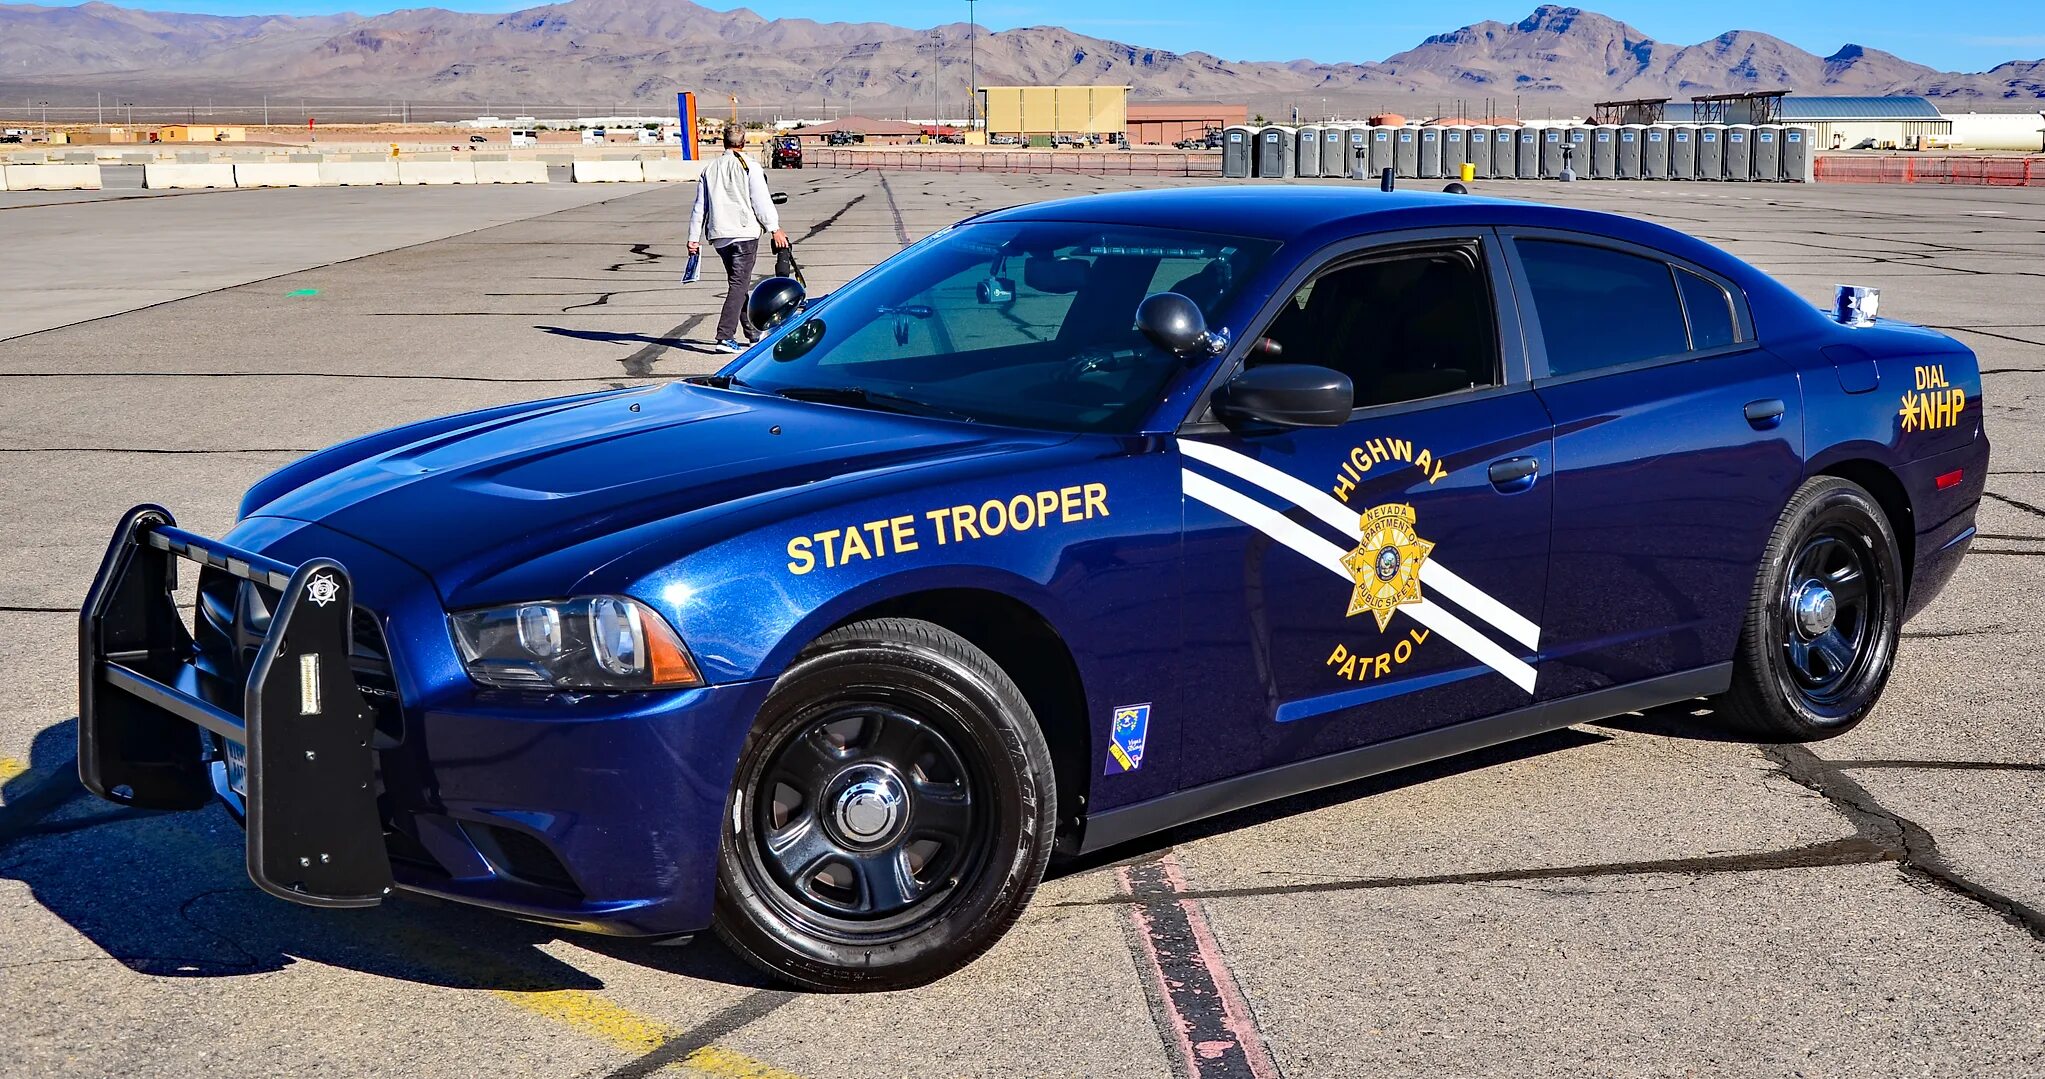 Nevada Highway Patrol. Dodge Charger Highway Patrol. Nevada Highway Patrol State Trooper. Полицейский Додж Чарджер. Highway patrol перевод